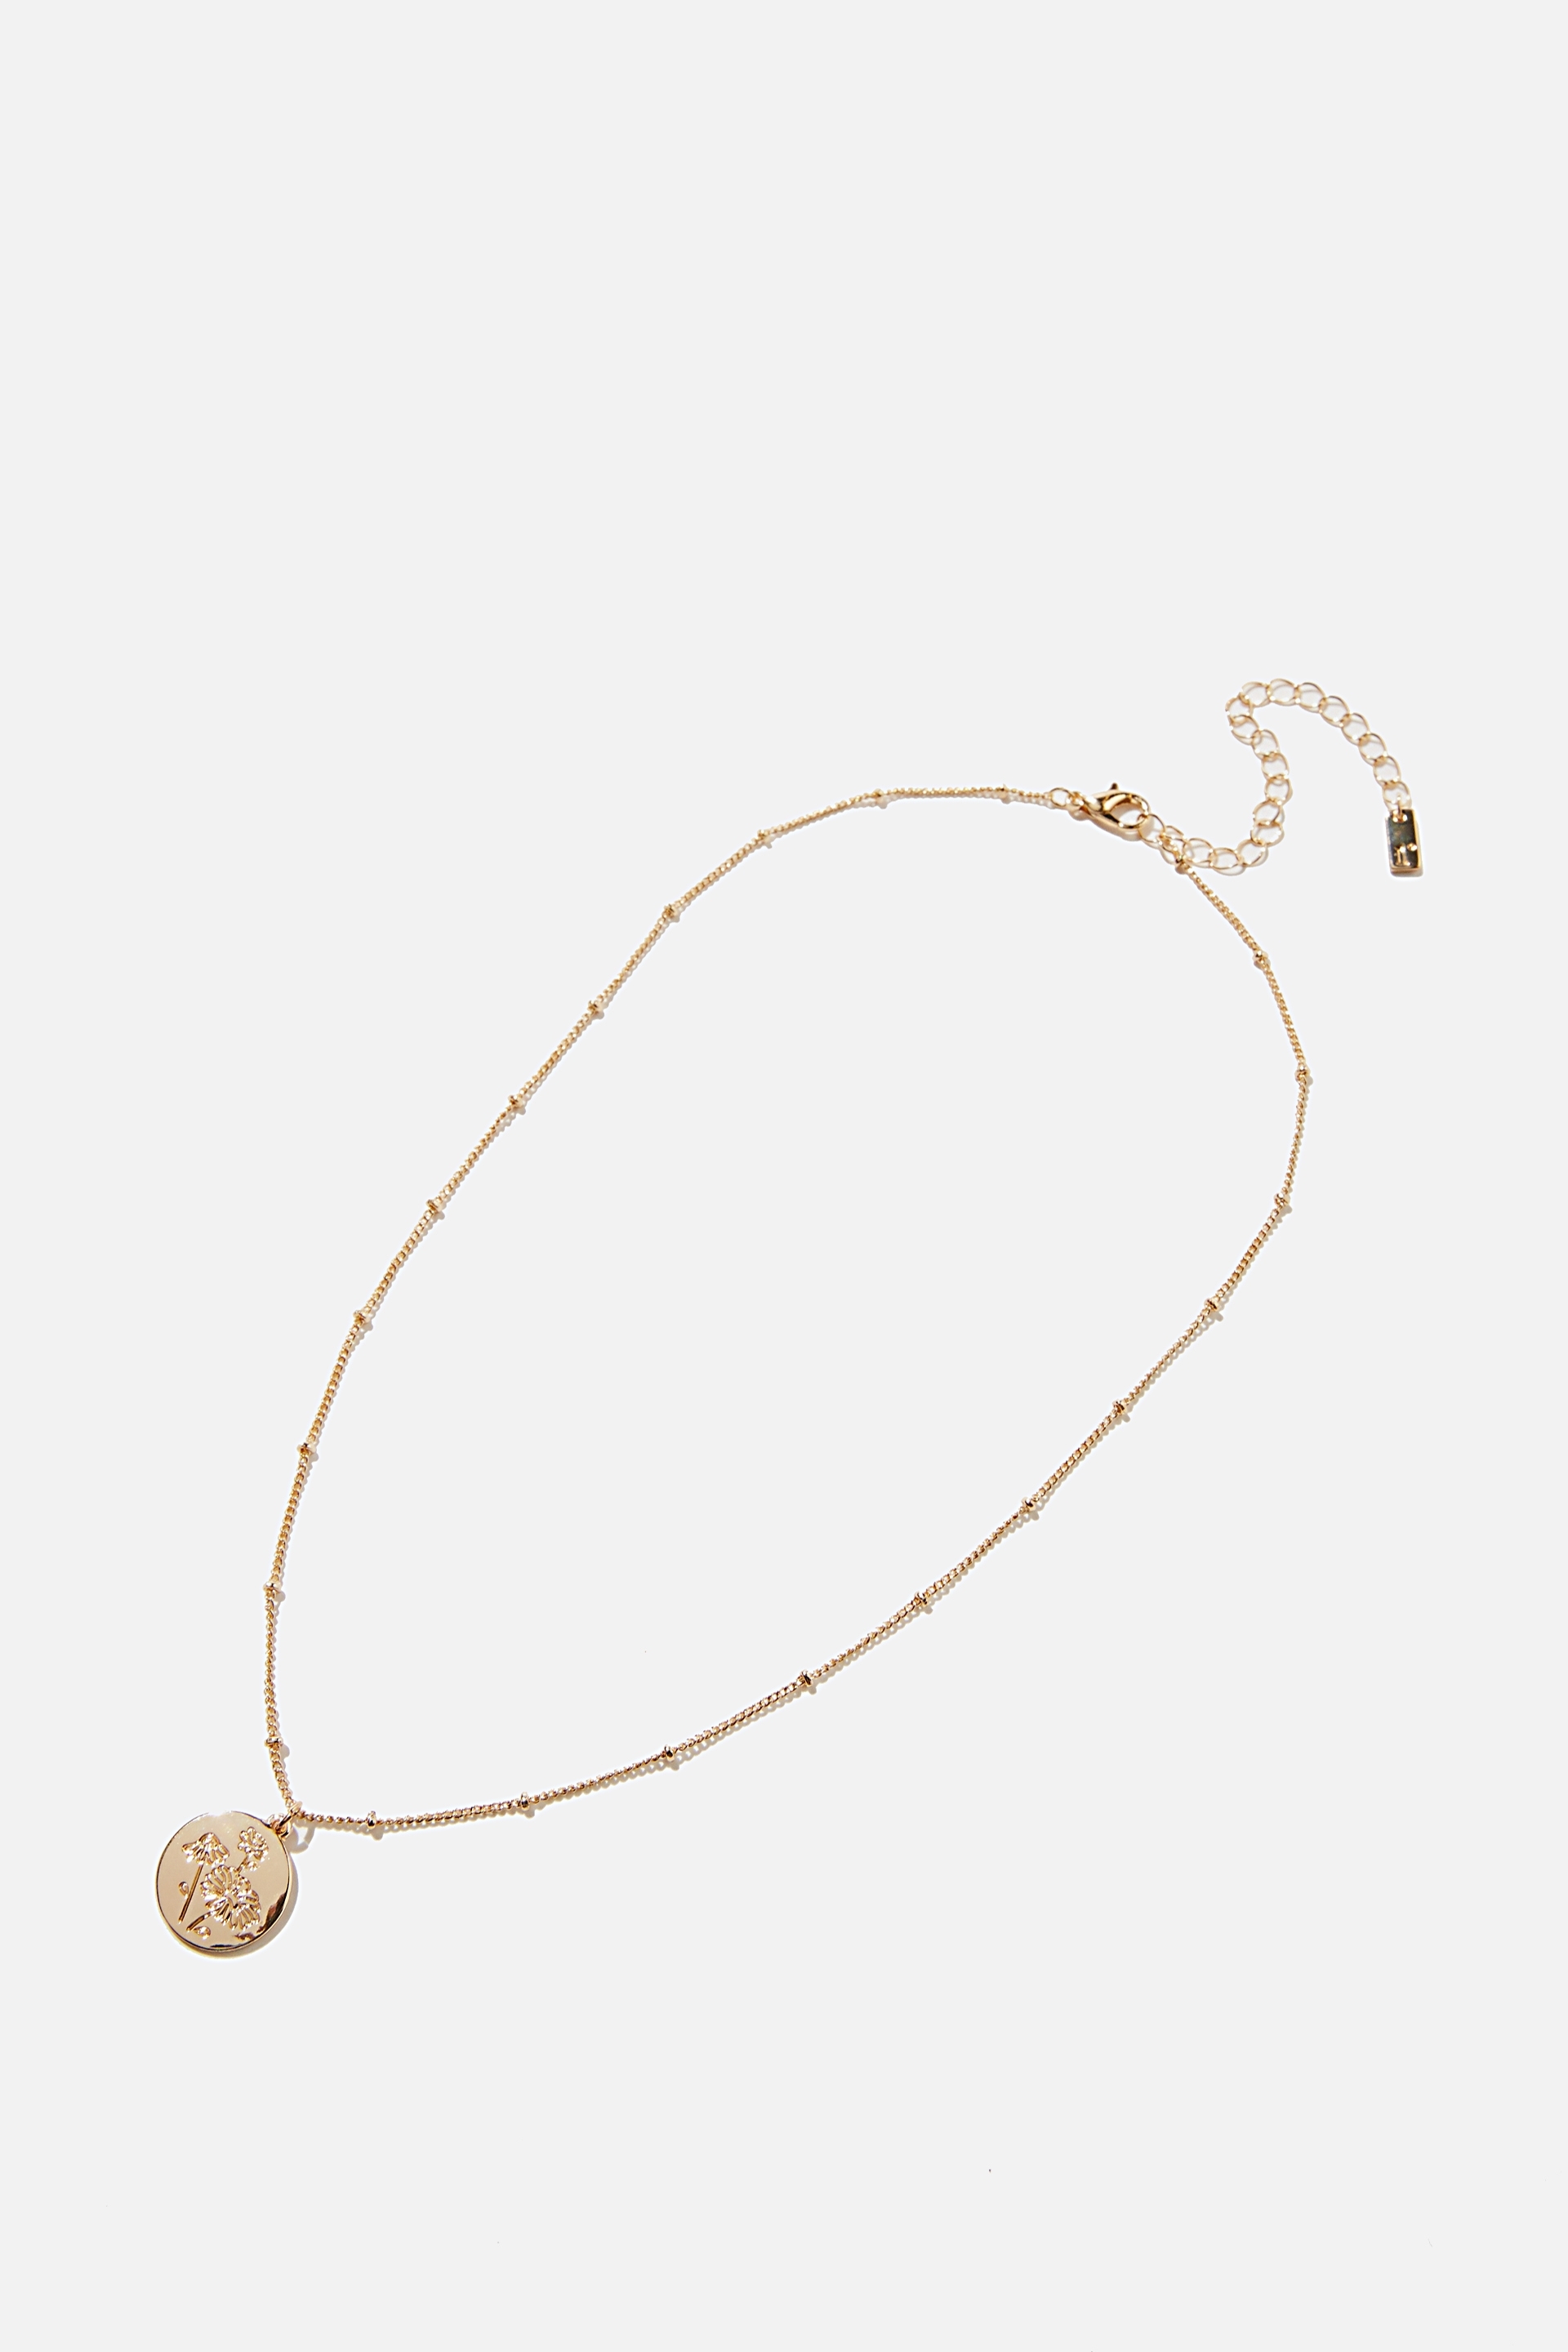 Rubi - Reloved Pendant Necklace - Gold floral